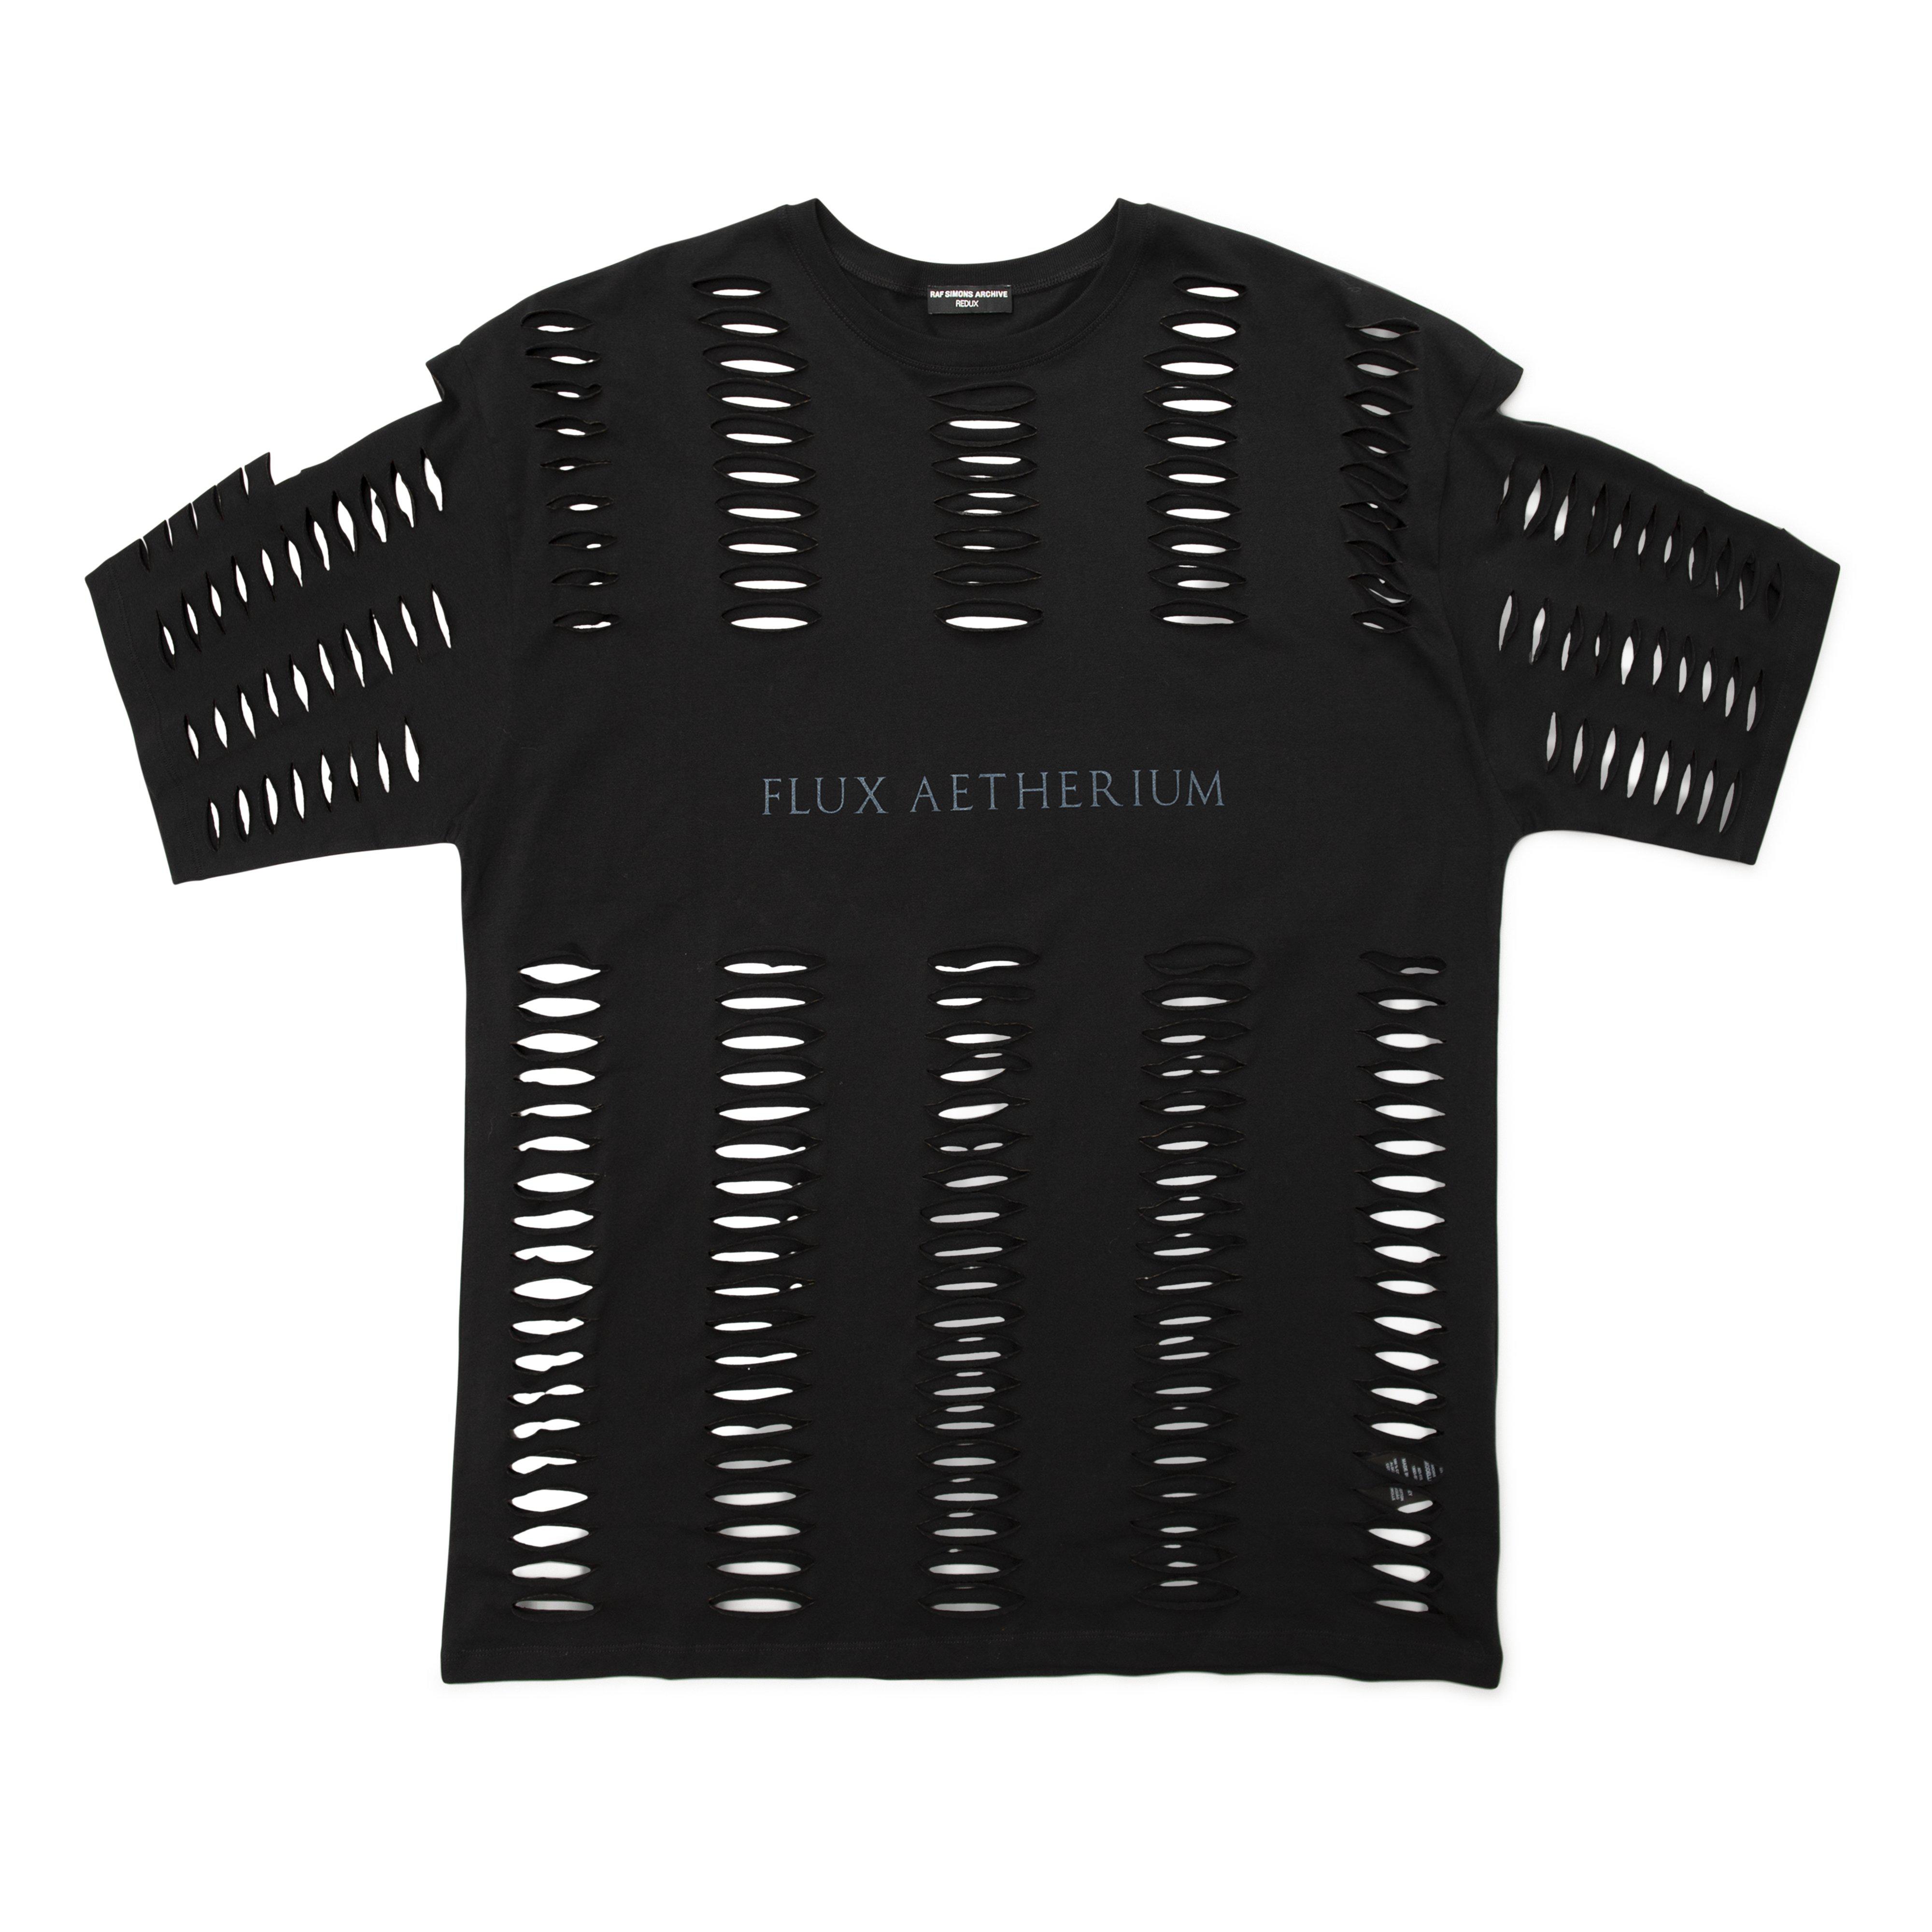 Raf Archive Redux Ss T-Shirt W Cuts And Print (Black) by BLACK